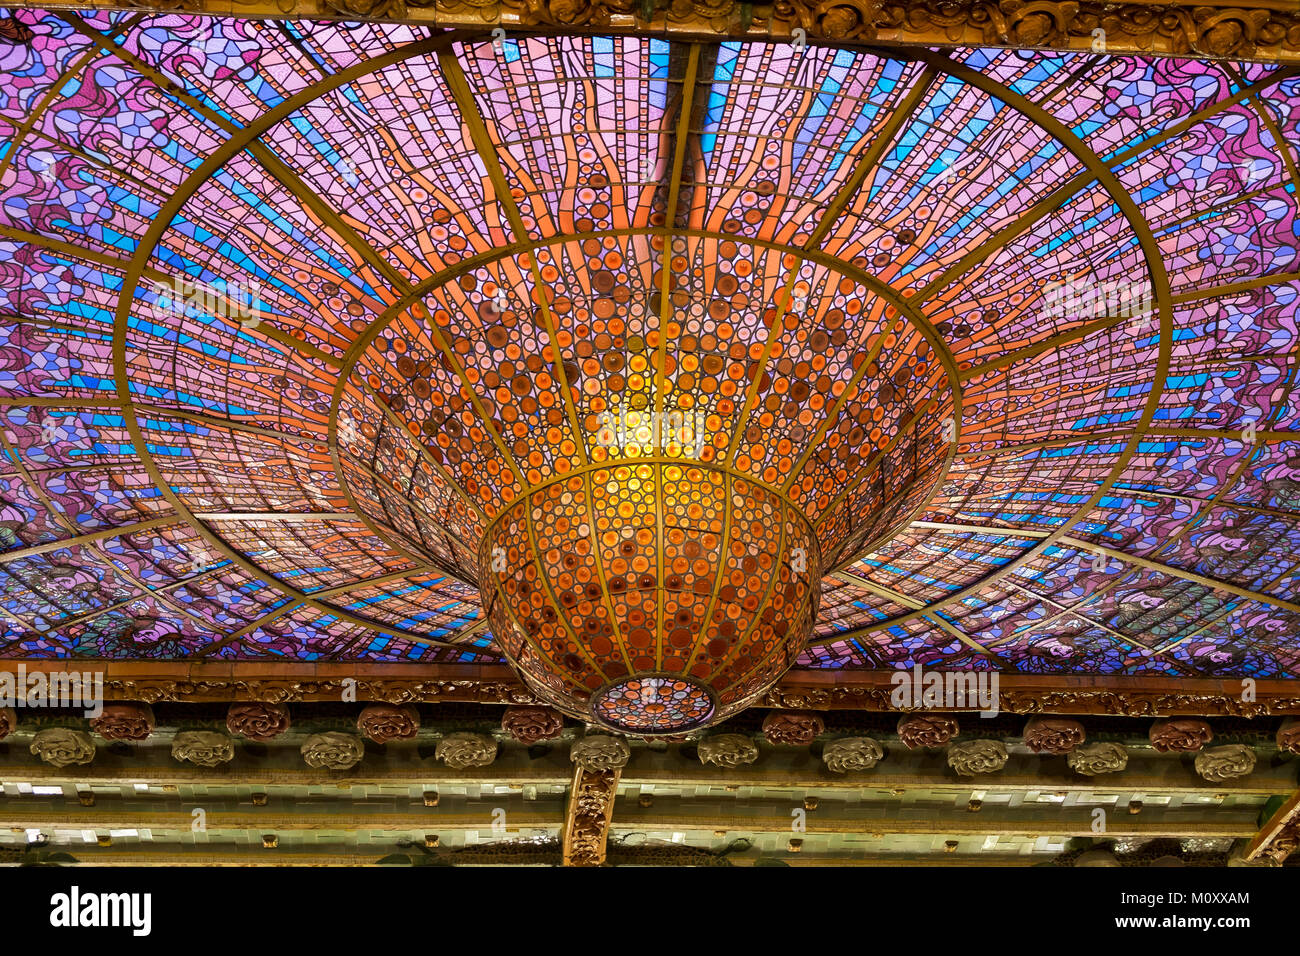 Ceiling of Palau de la Musica Catalana Stock Photo